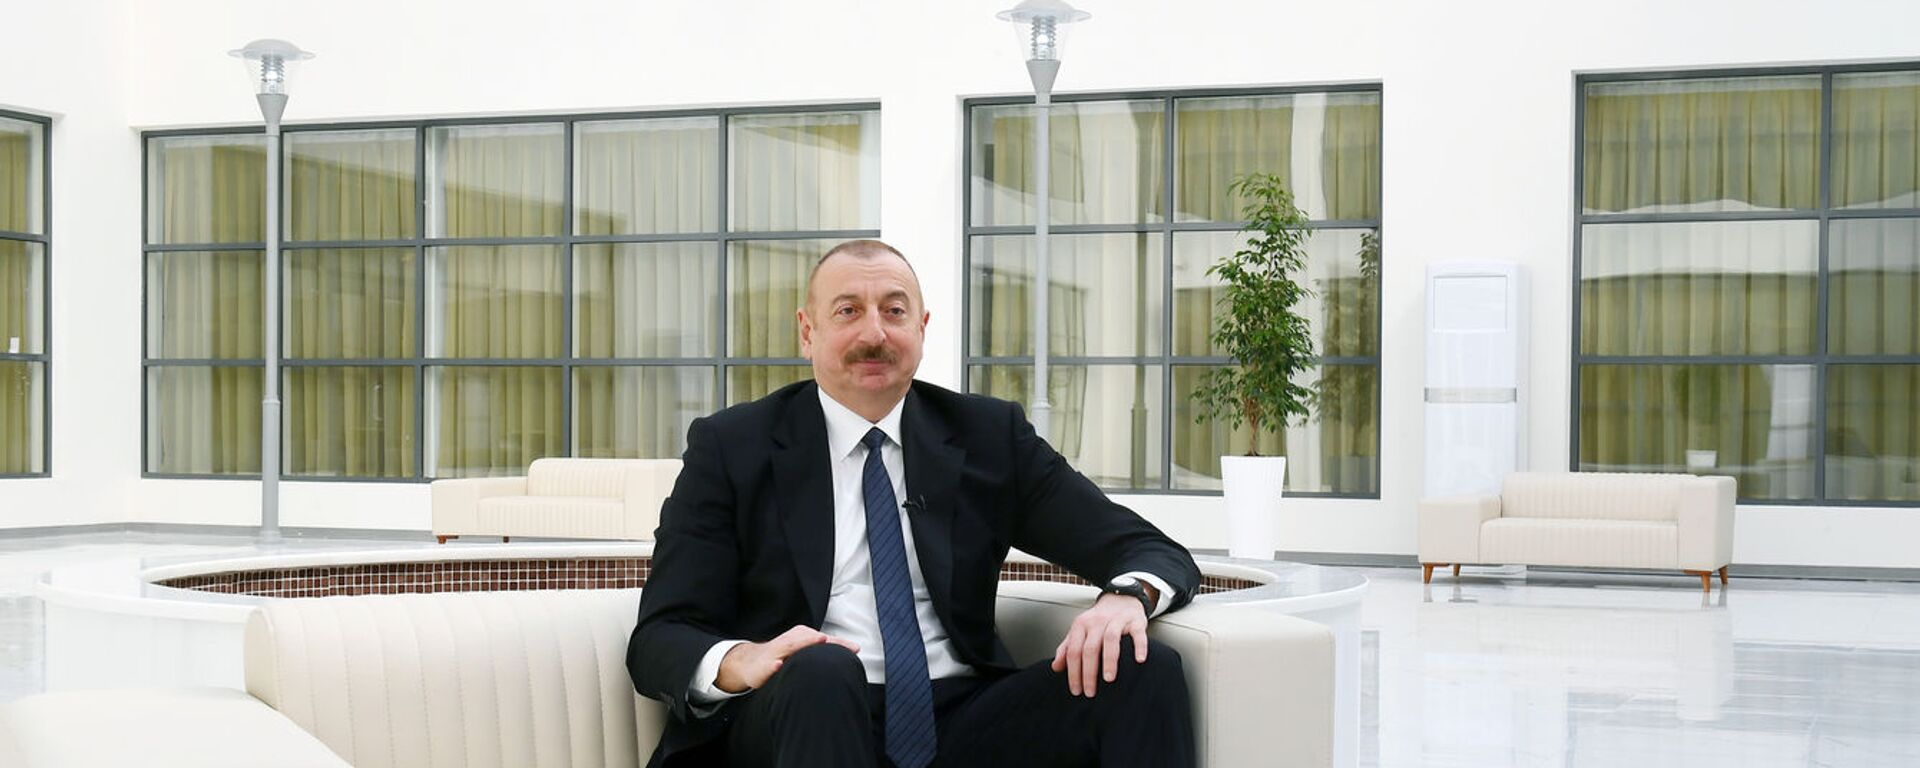 Президент Ильхам Алиев, фото из архива - Sputnik Азербайджан, 1920, 04.02.2021